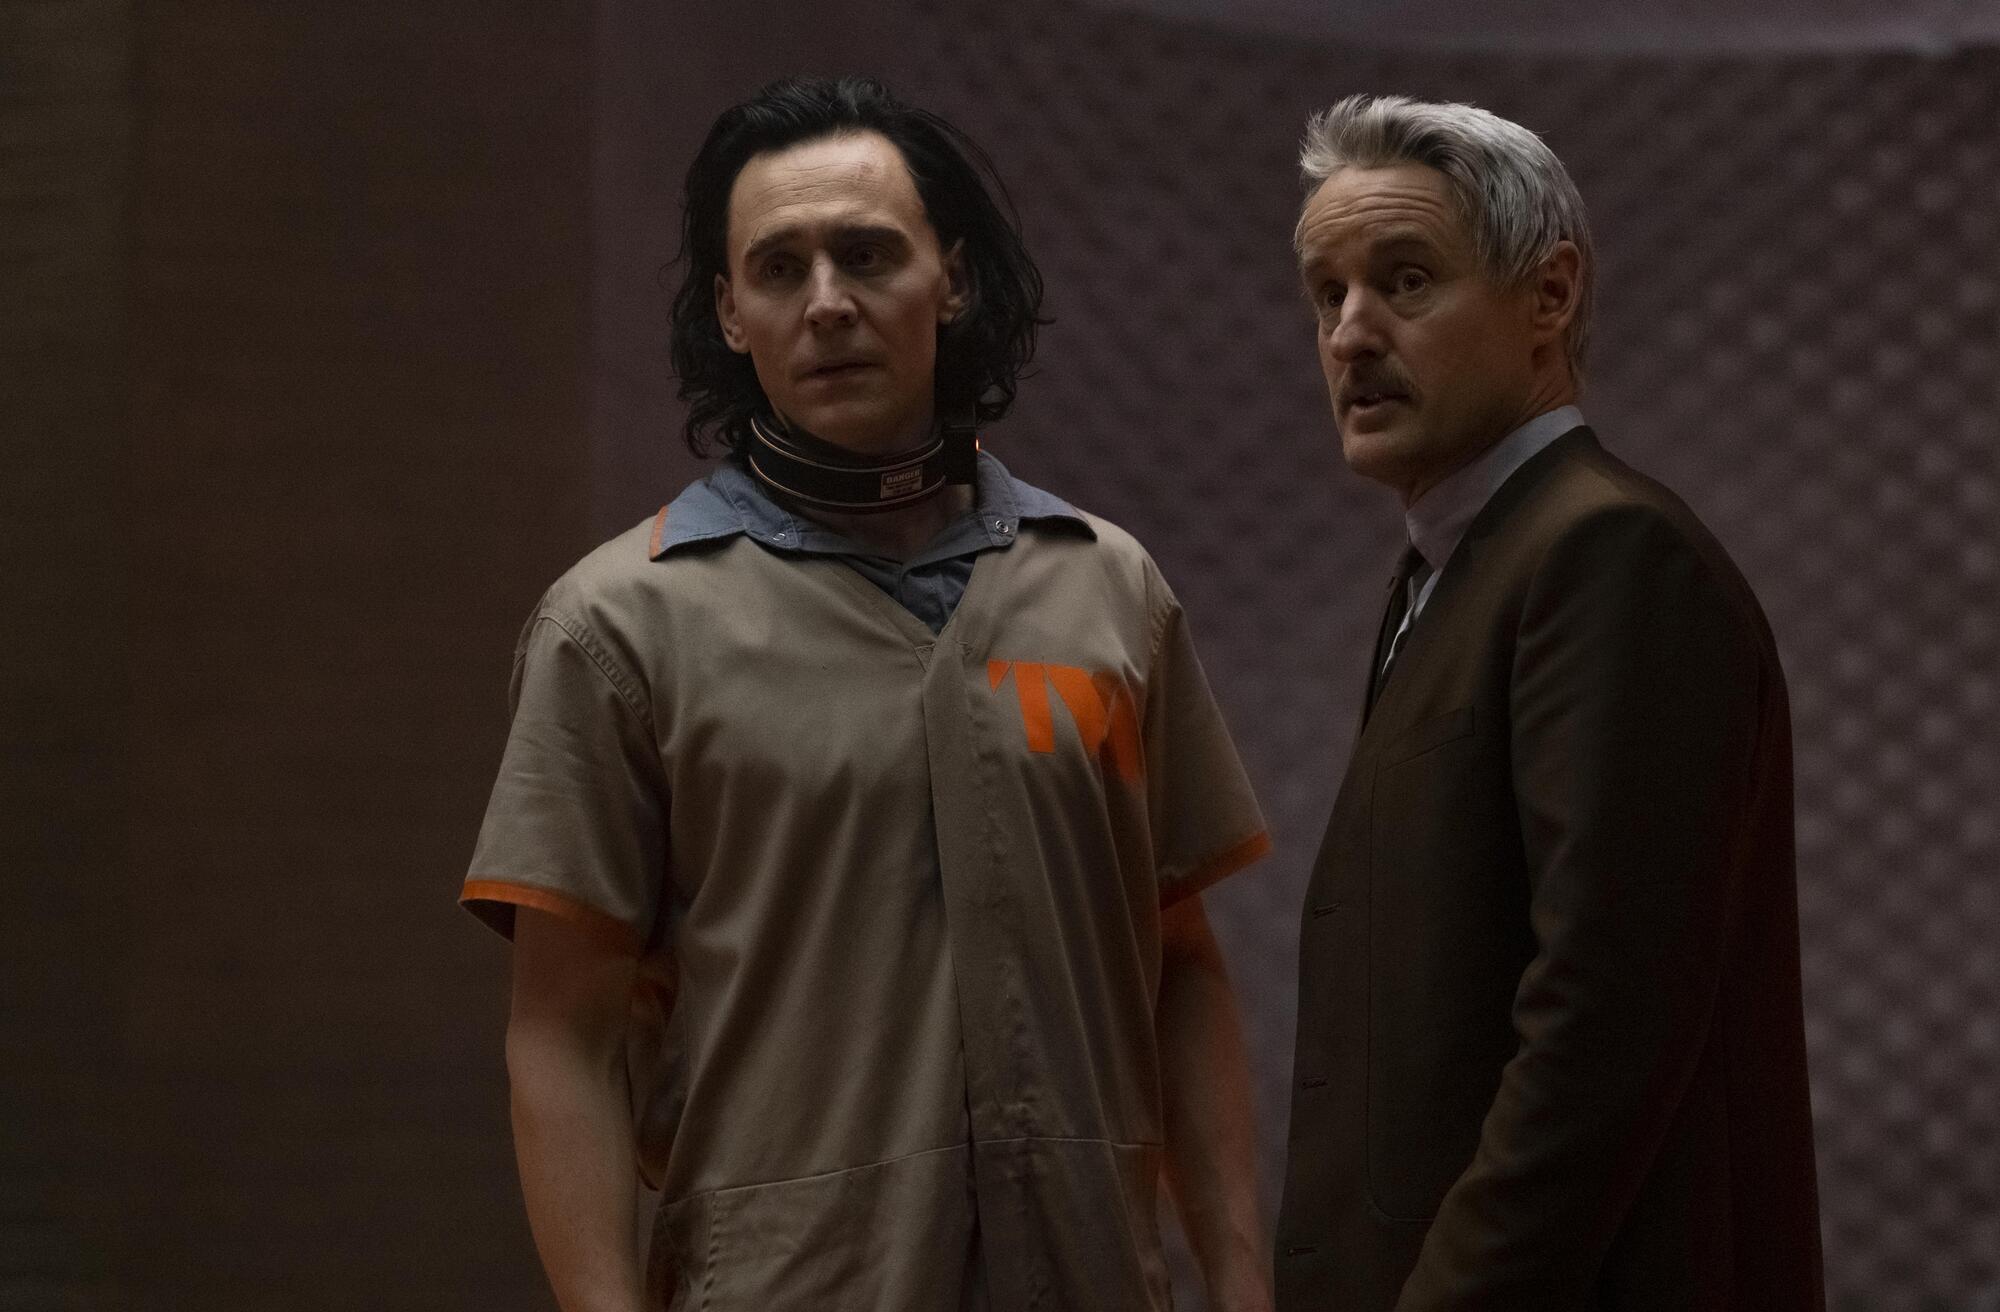 Owen Wilson welcomes Tom Hiddleston to the TVA on Loki